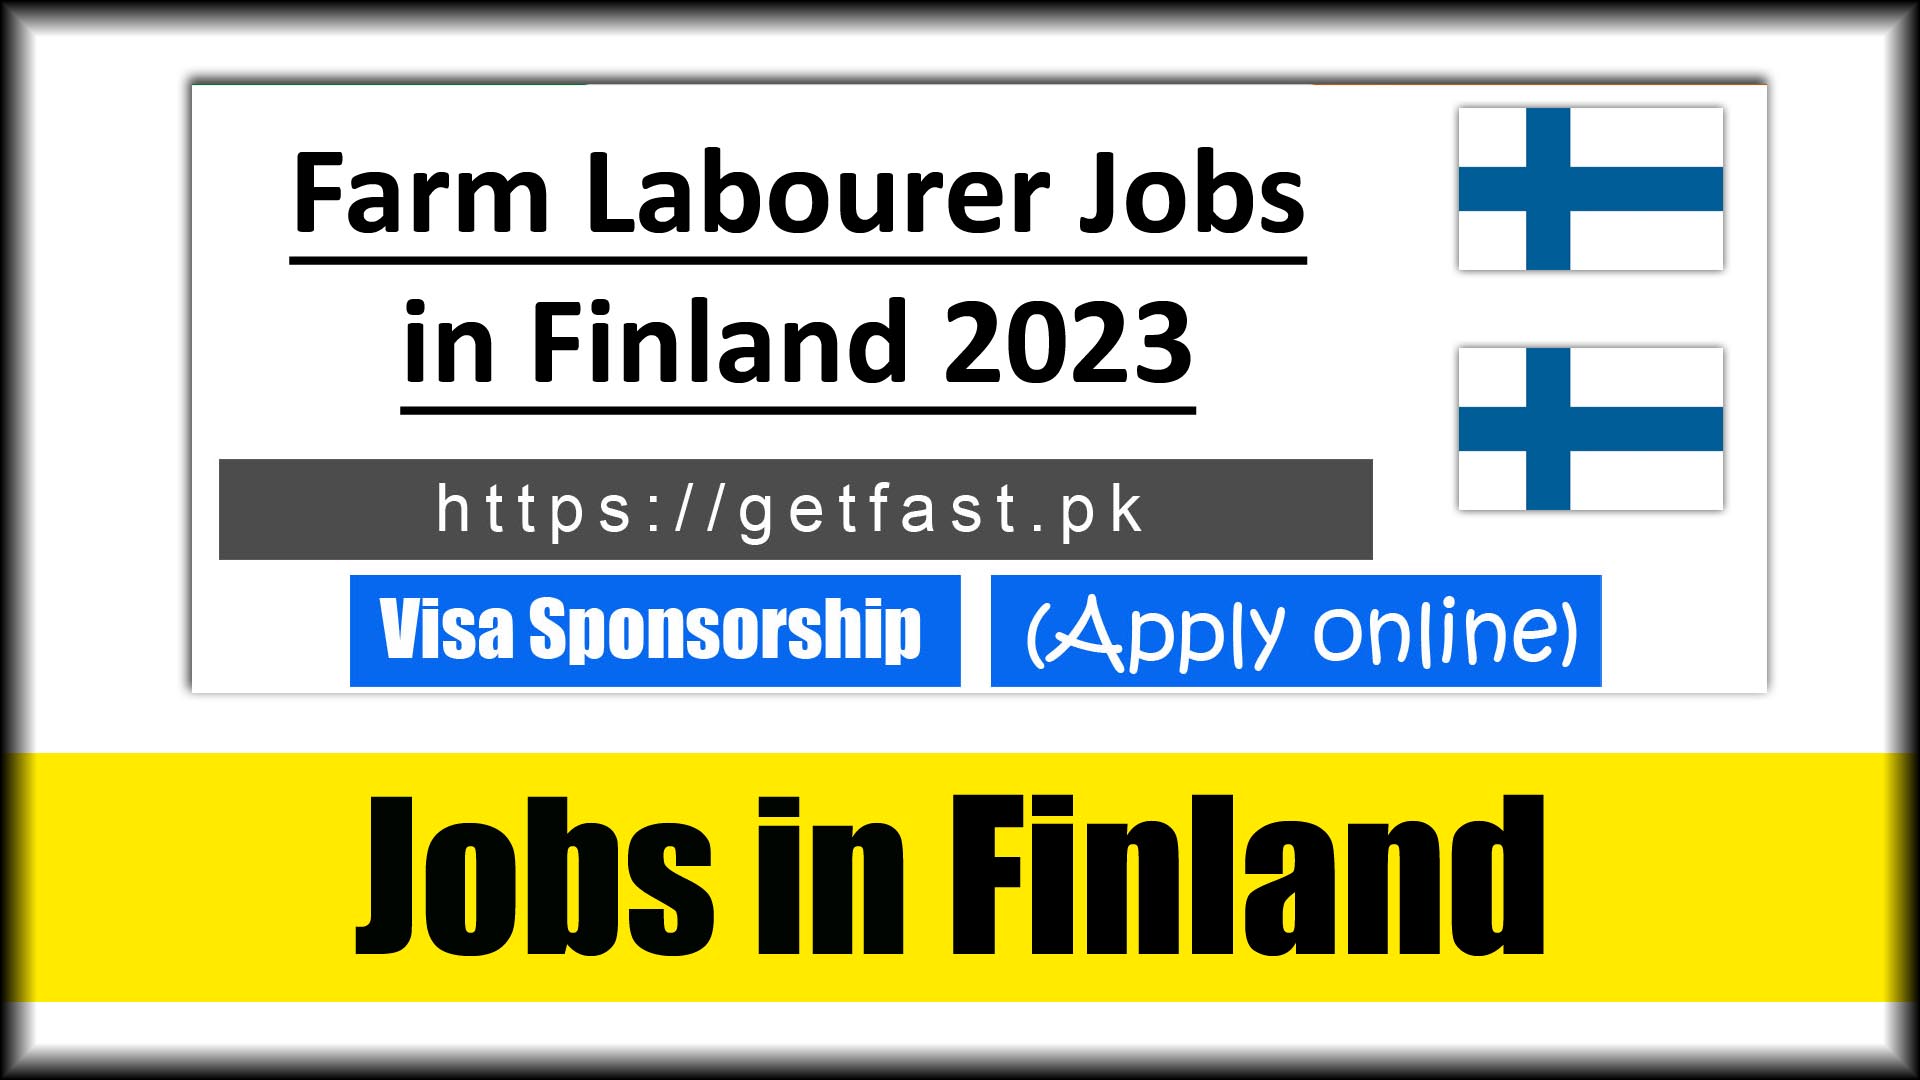 Farm Labourer Jobs in Finland 2023 with visa sponsorship - Apply Online